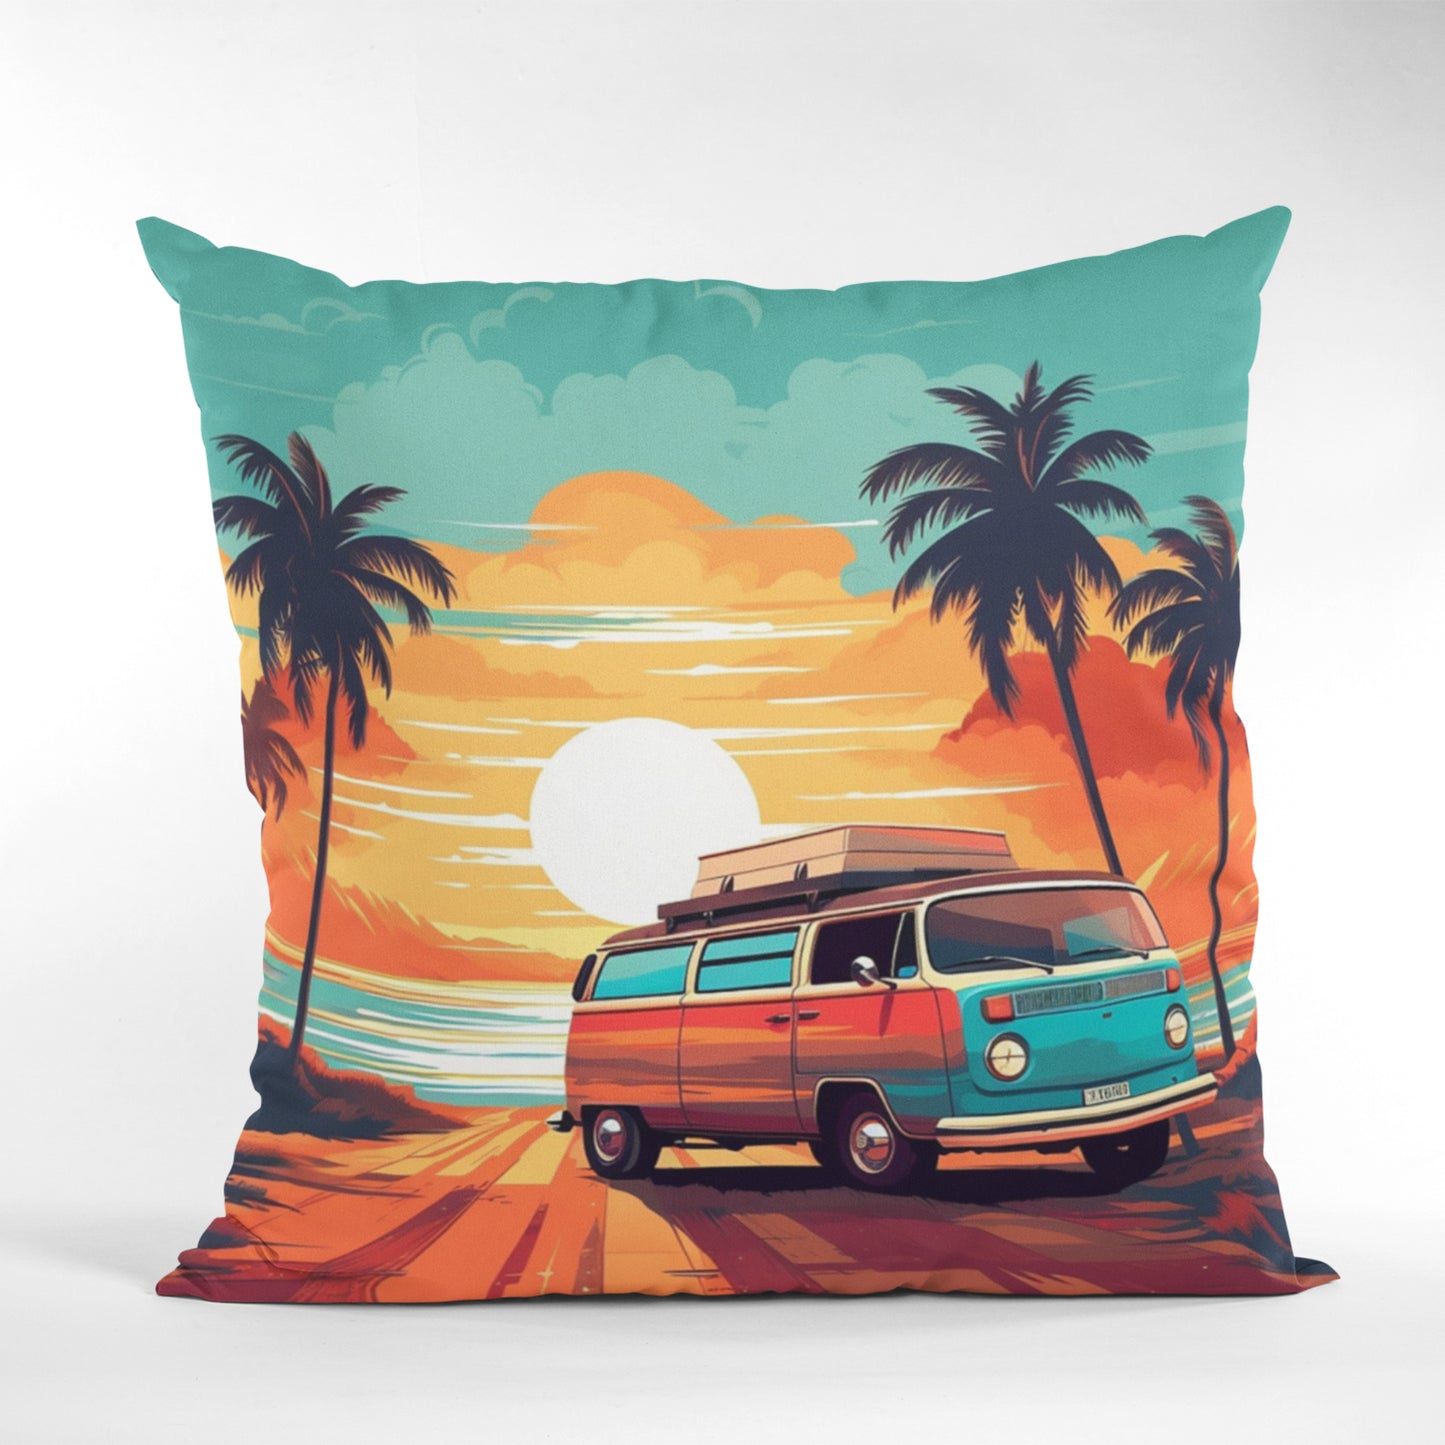 Retro Camping Van Throw Pillow, Bohemian Home Decor Cushion Cover by Homeezone